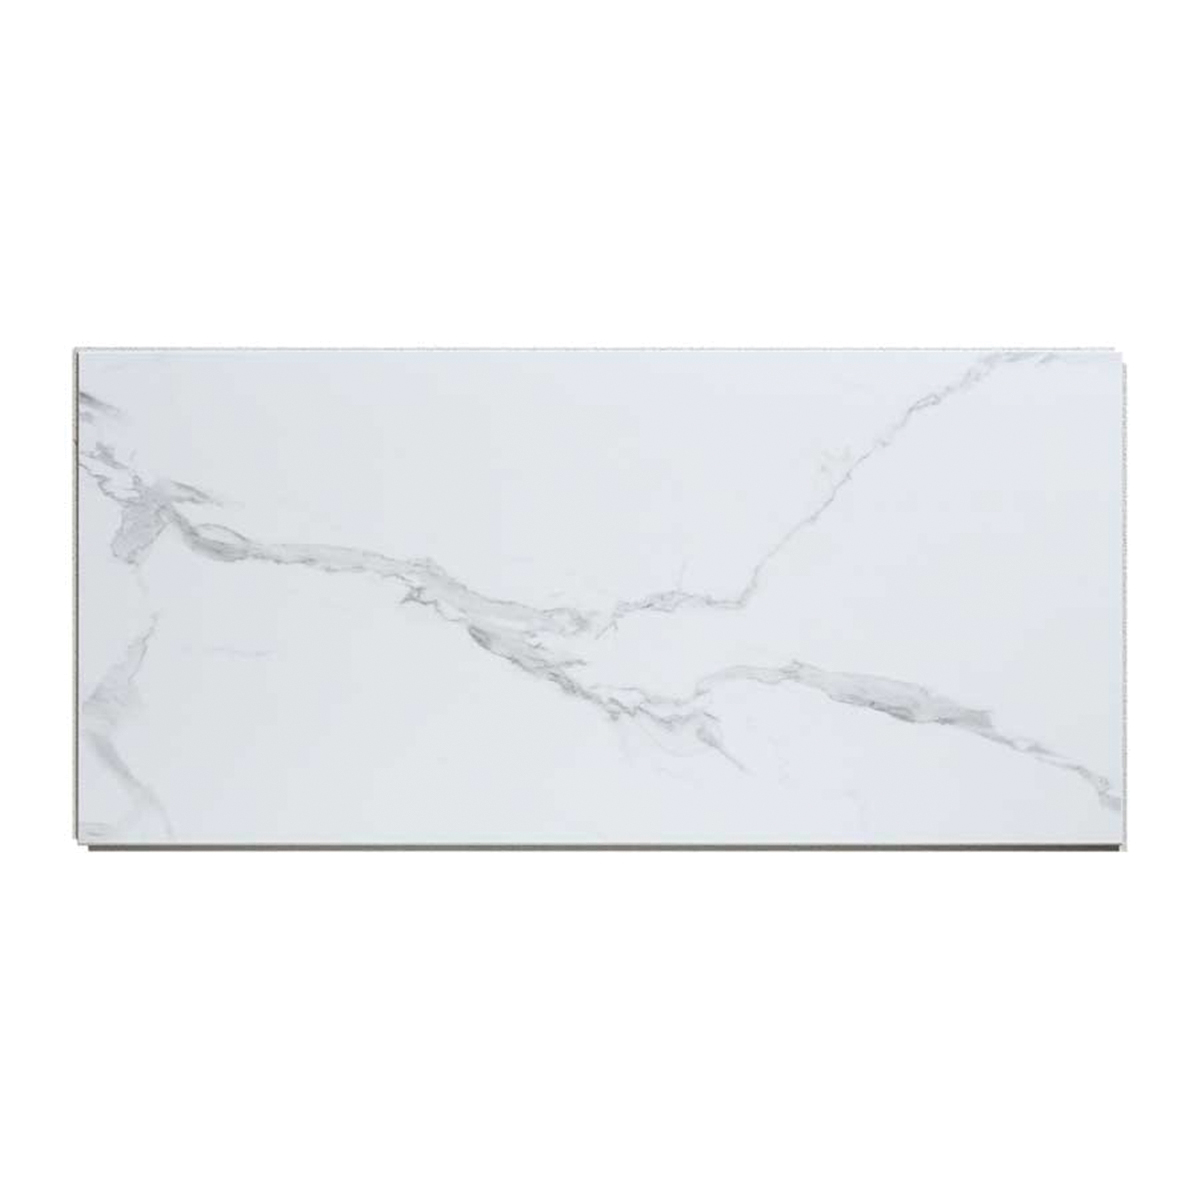 53510 Small Wall Tile, 23.2 in L, 11.1 in W, Interlocking Edge, Vinyl, Carrara Marble, Adhesive Installation